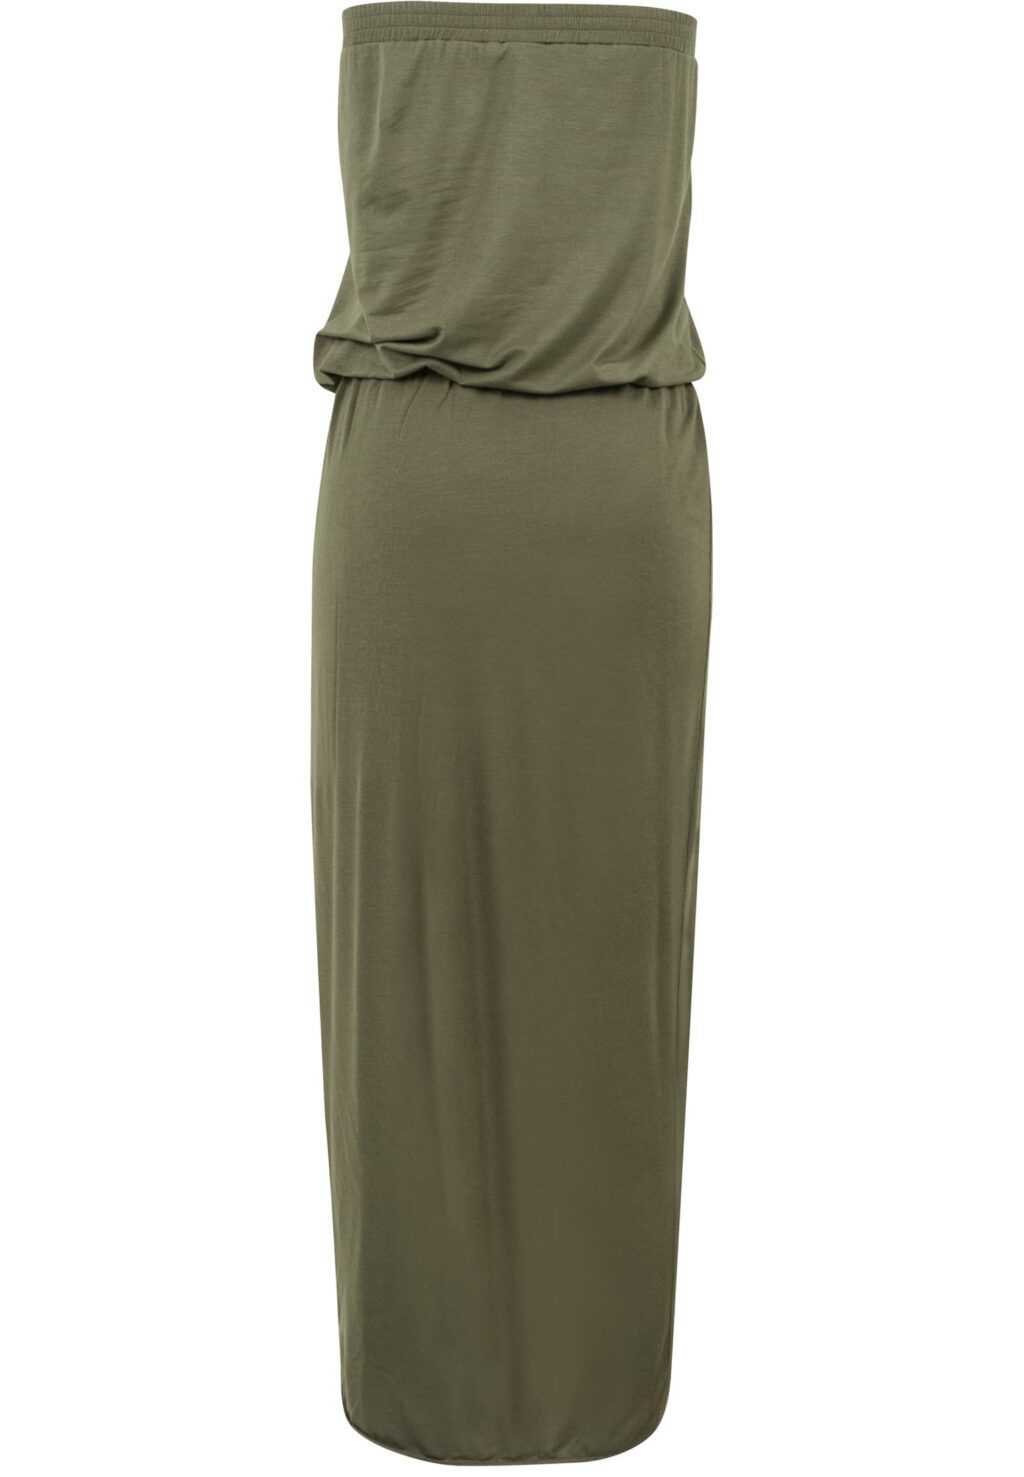 Urban Classics Ladies Viscose Bandeau Dress olive TB1508